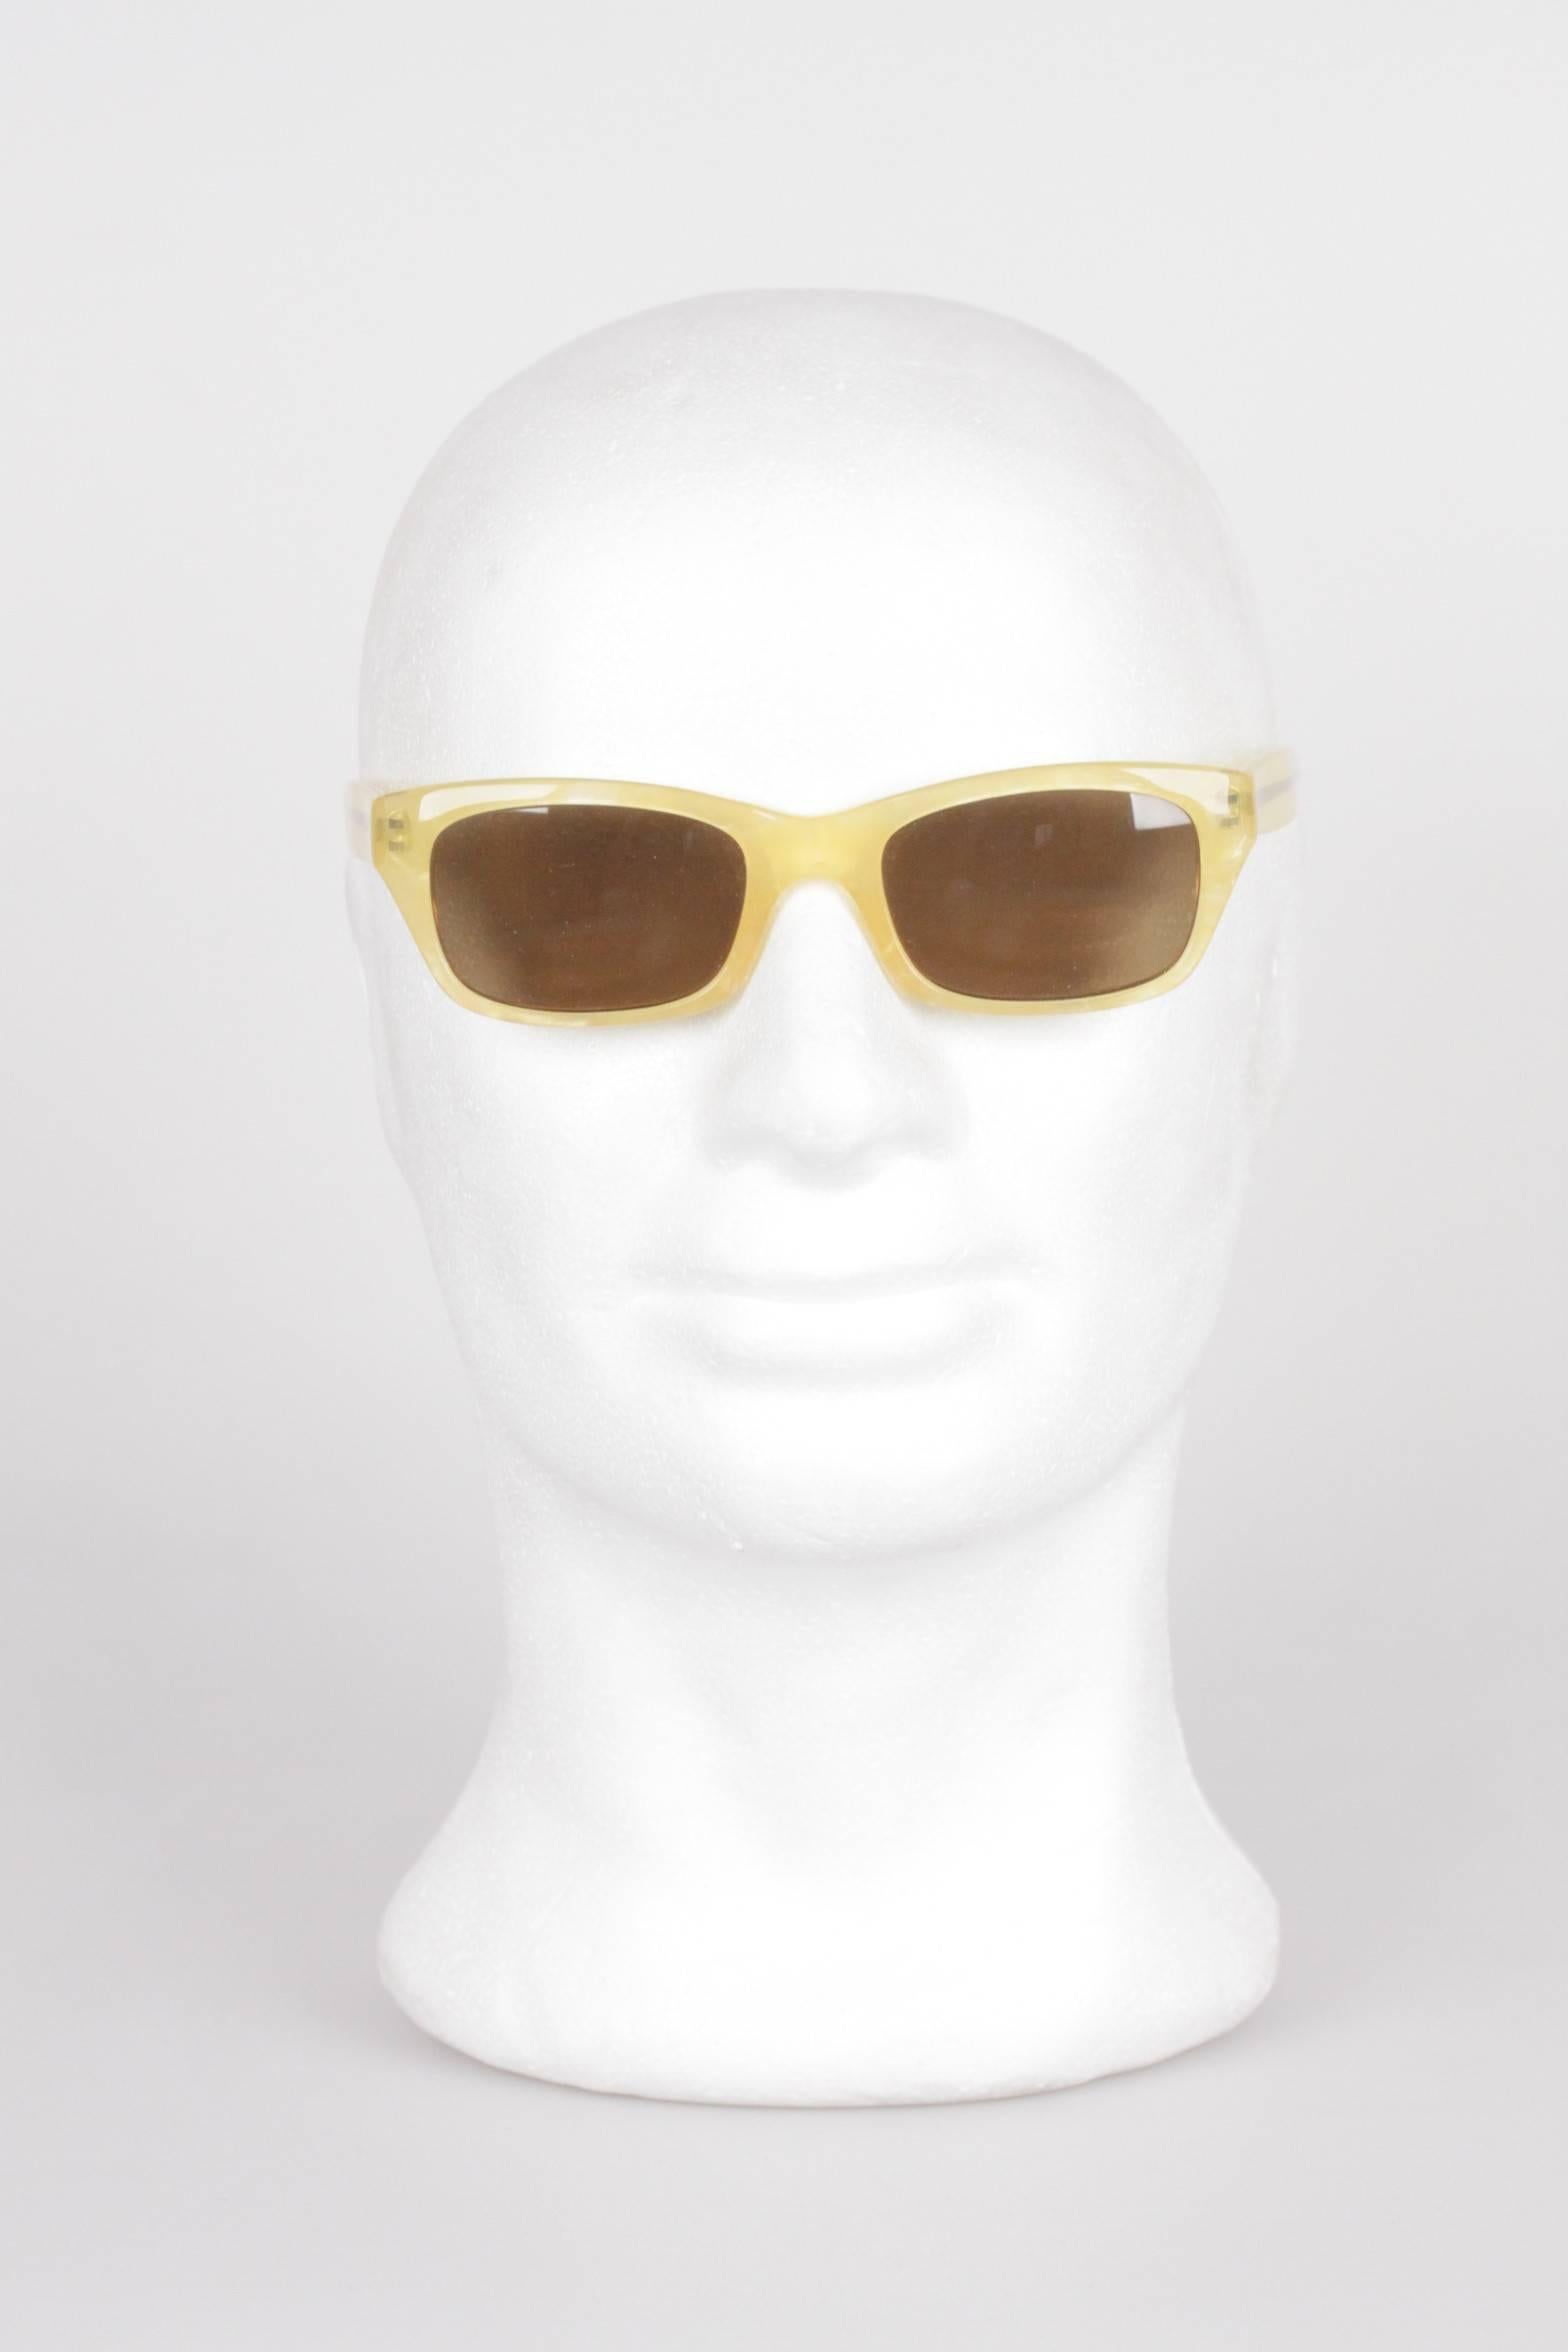 Brown ALAIN MIKLI Paris Vintage HONEY unisex Sunglasses frame 3133 col 2103 50mm